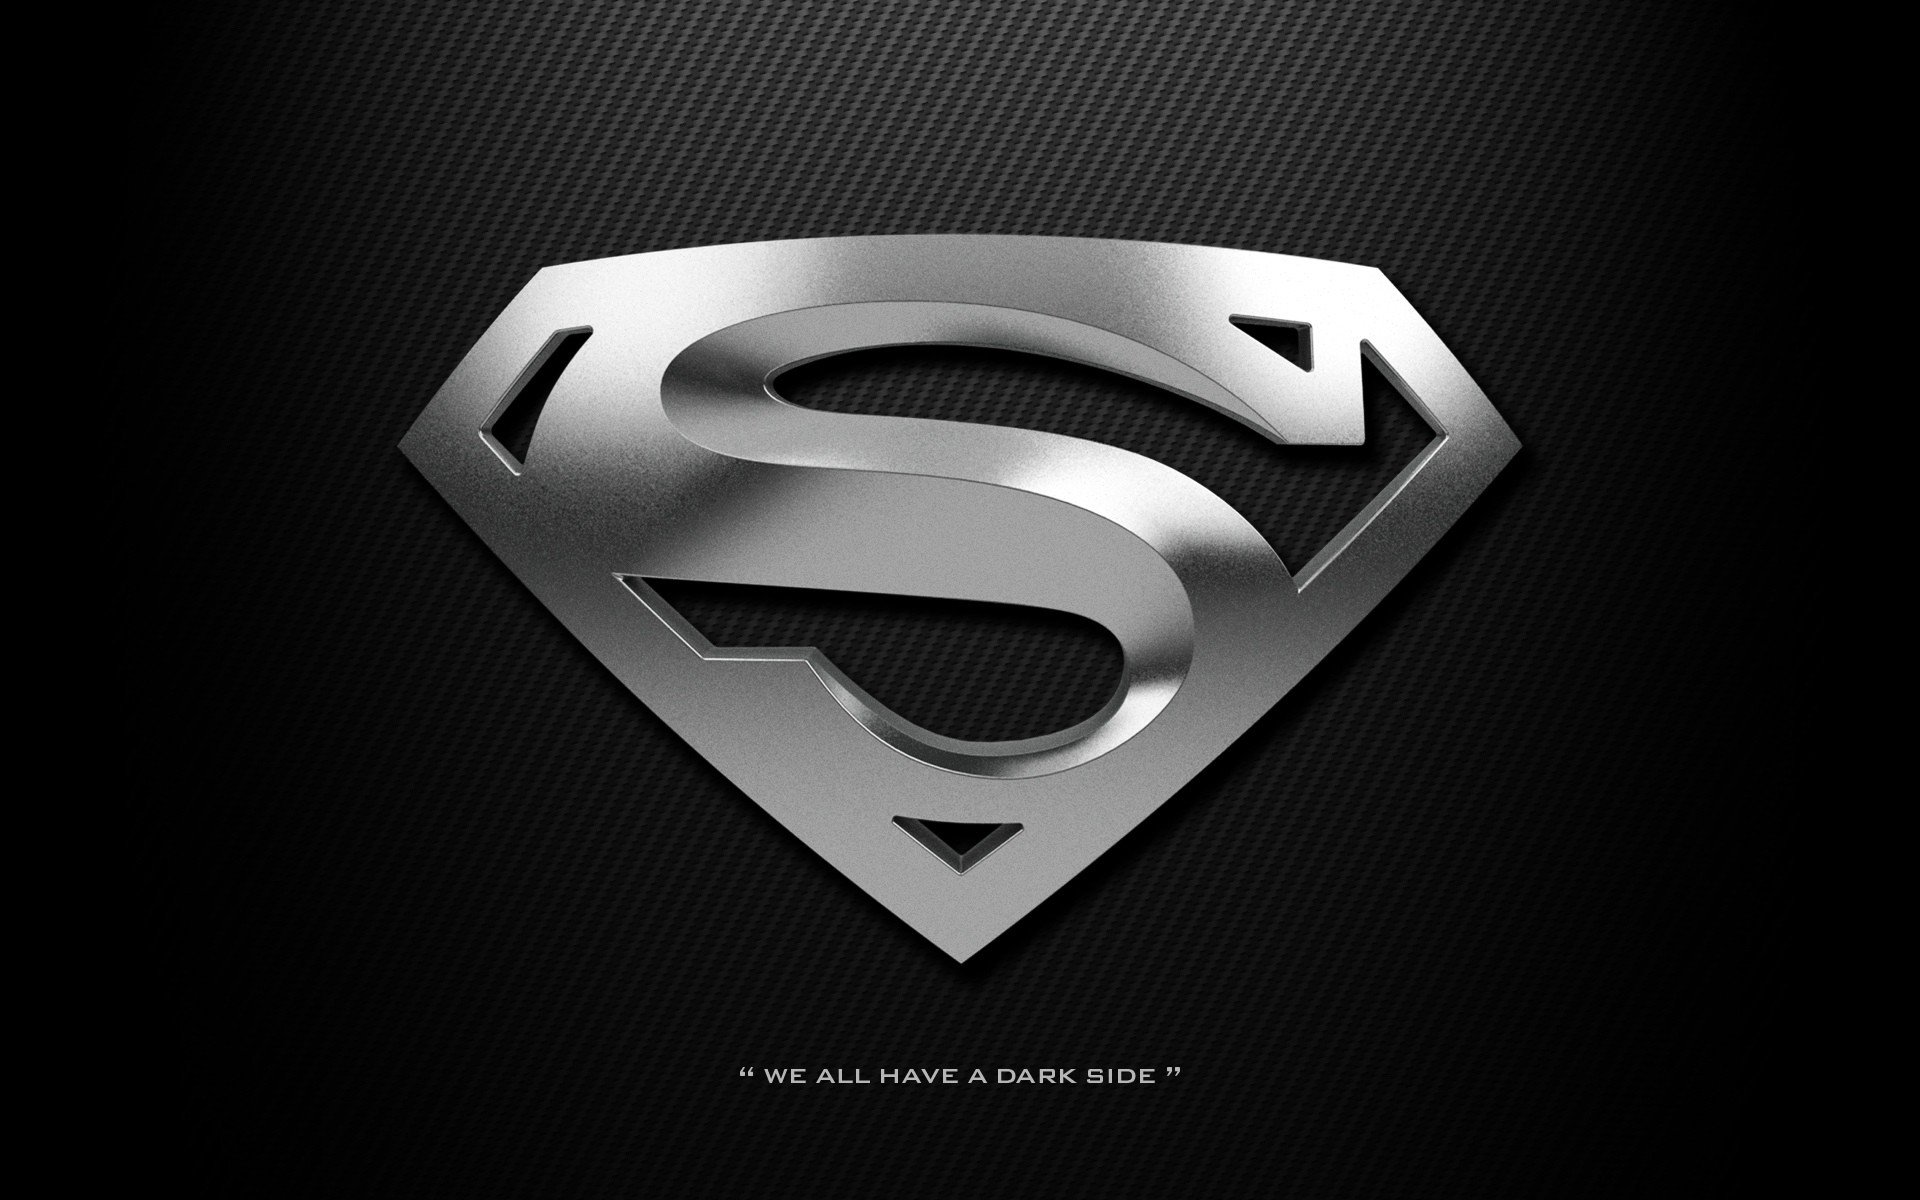 Superman logo wallpaper HD black dark silver chrome carbon We all